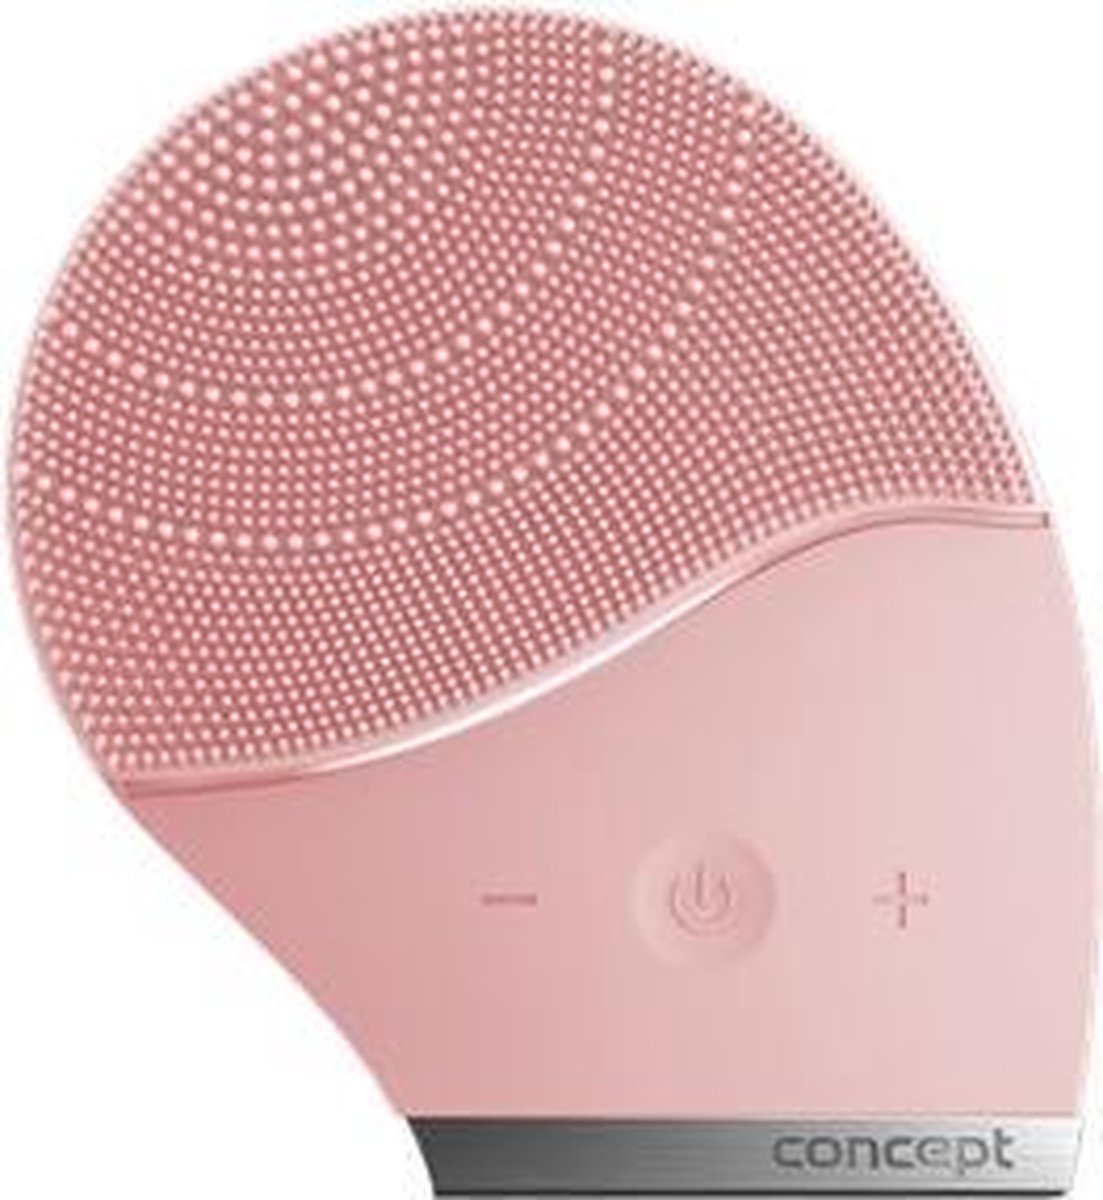 Concept - Sonivibe SK9002 - Čisticí sonický kartáček na obličej ( pink champagne )